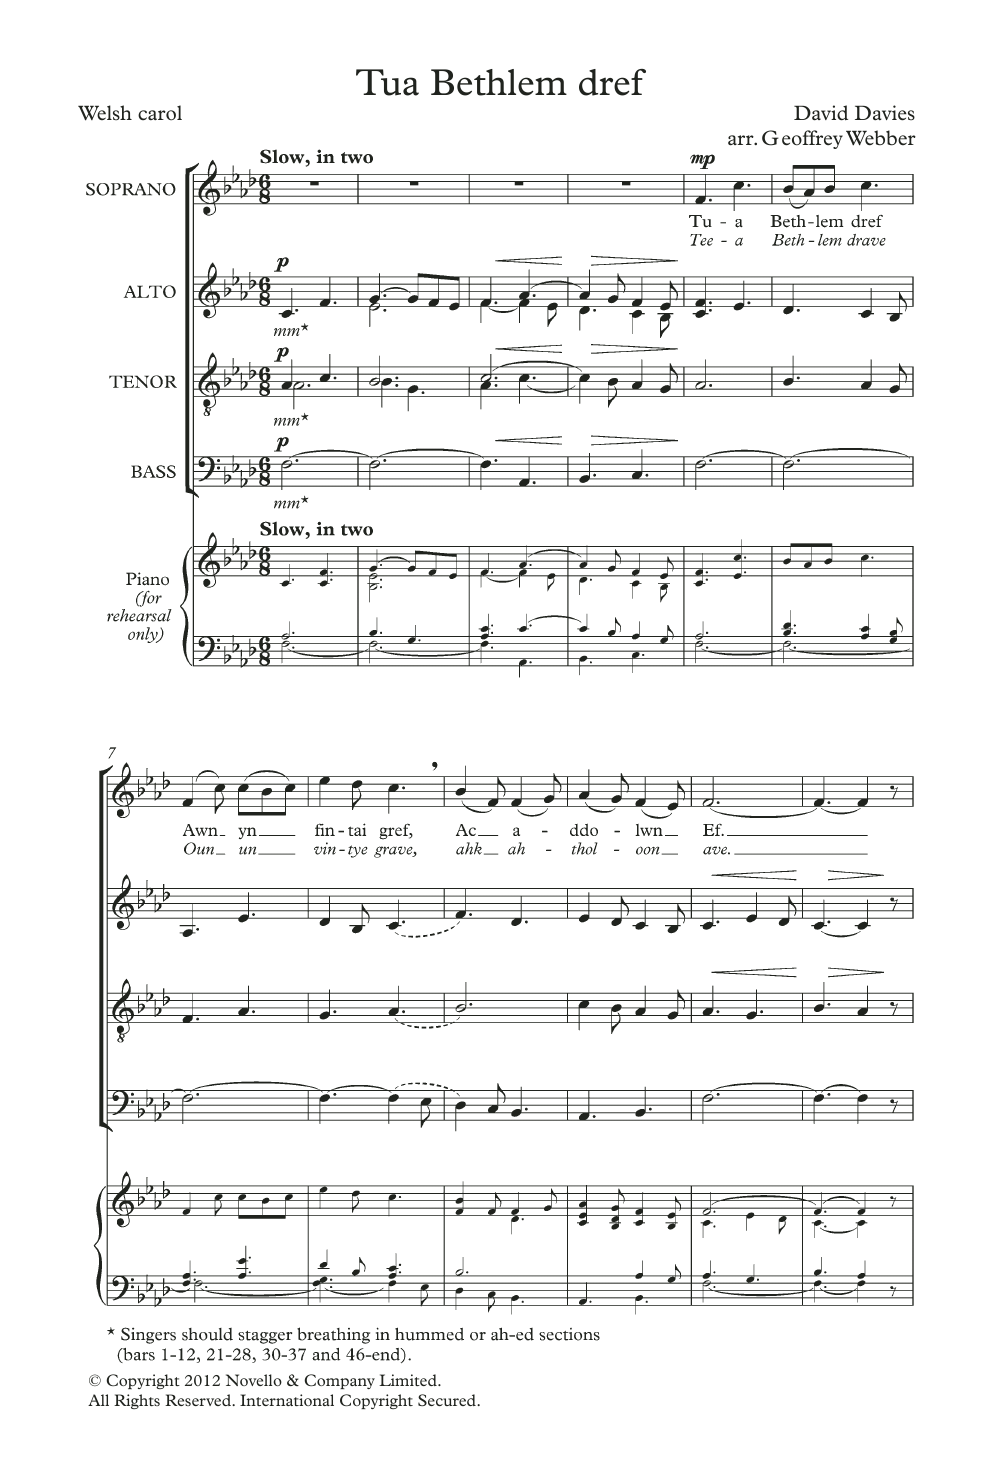 David Davies Tua Bethlem Dref (arr. Geoffrey Webber) Sheet Music Notes & Chords for SATB Choir - Download or Print PDF